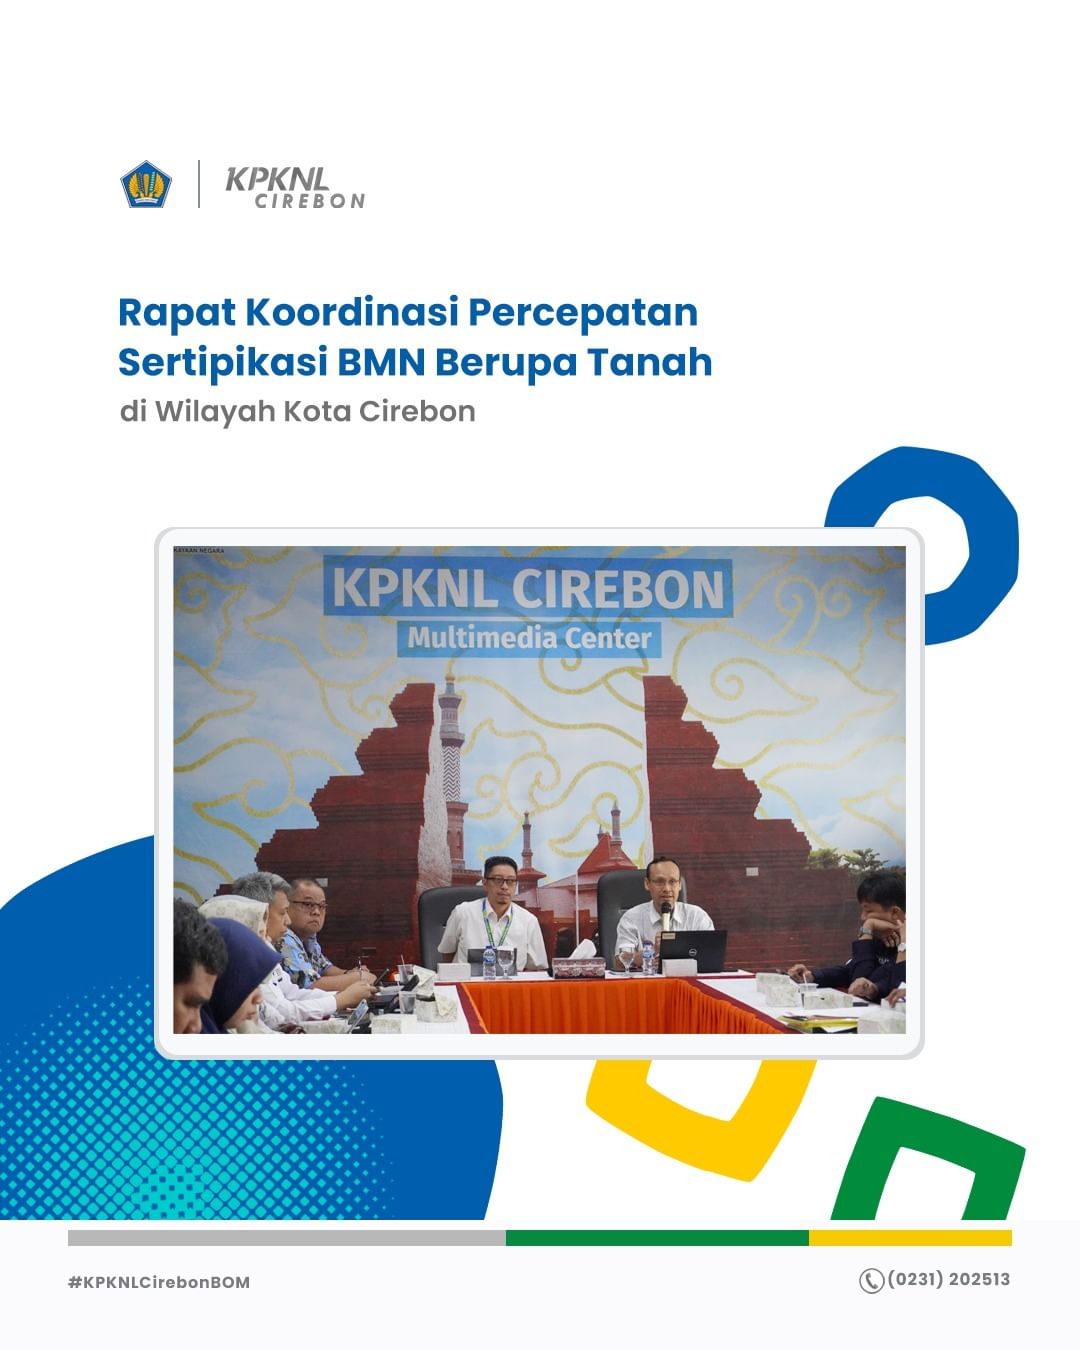 Rapat Koordinasi Percepatan Sertipikasi BMN berupa tanah di Wilayah Kota Cirebon